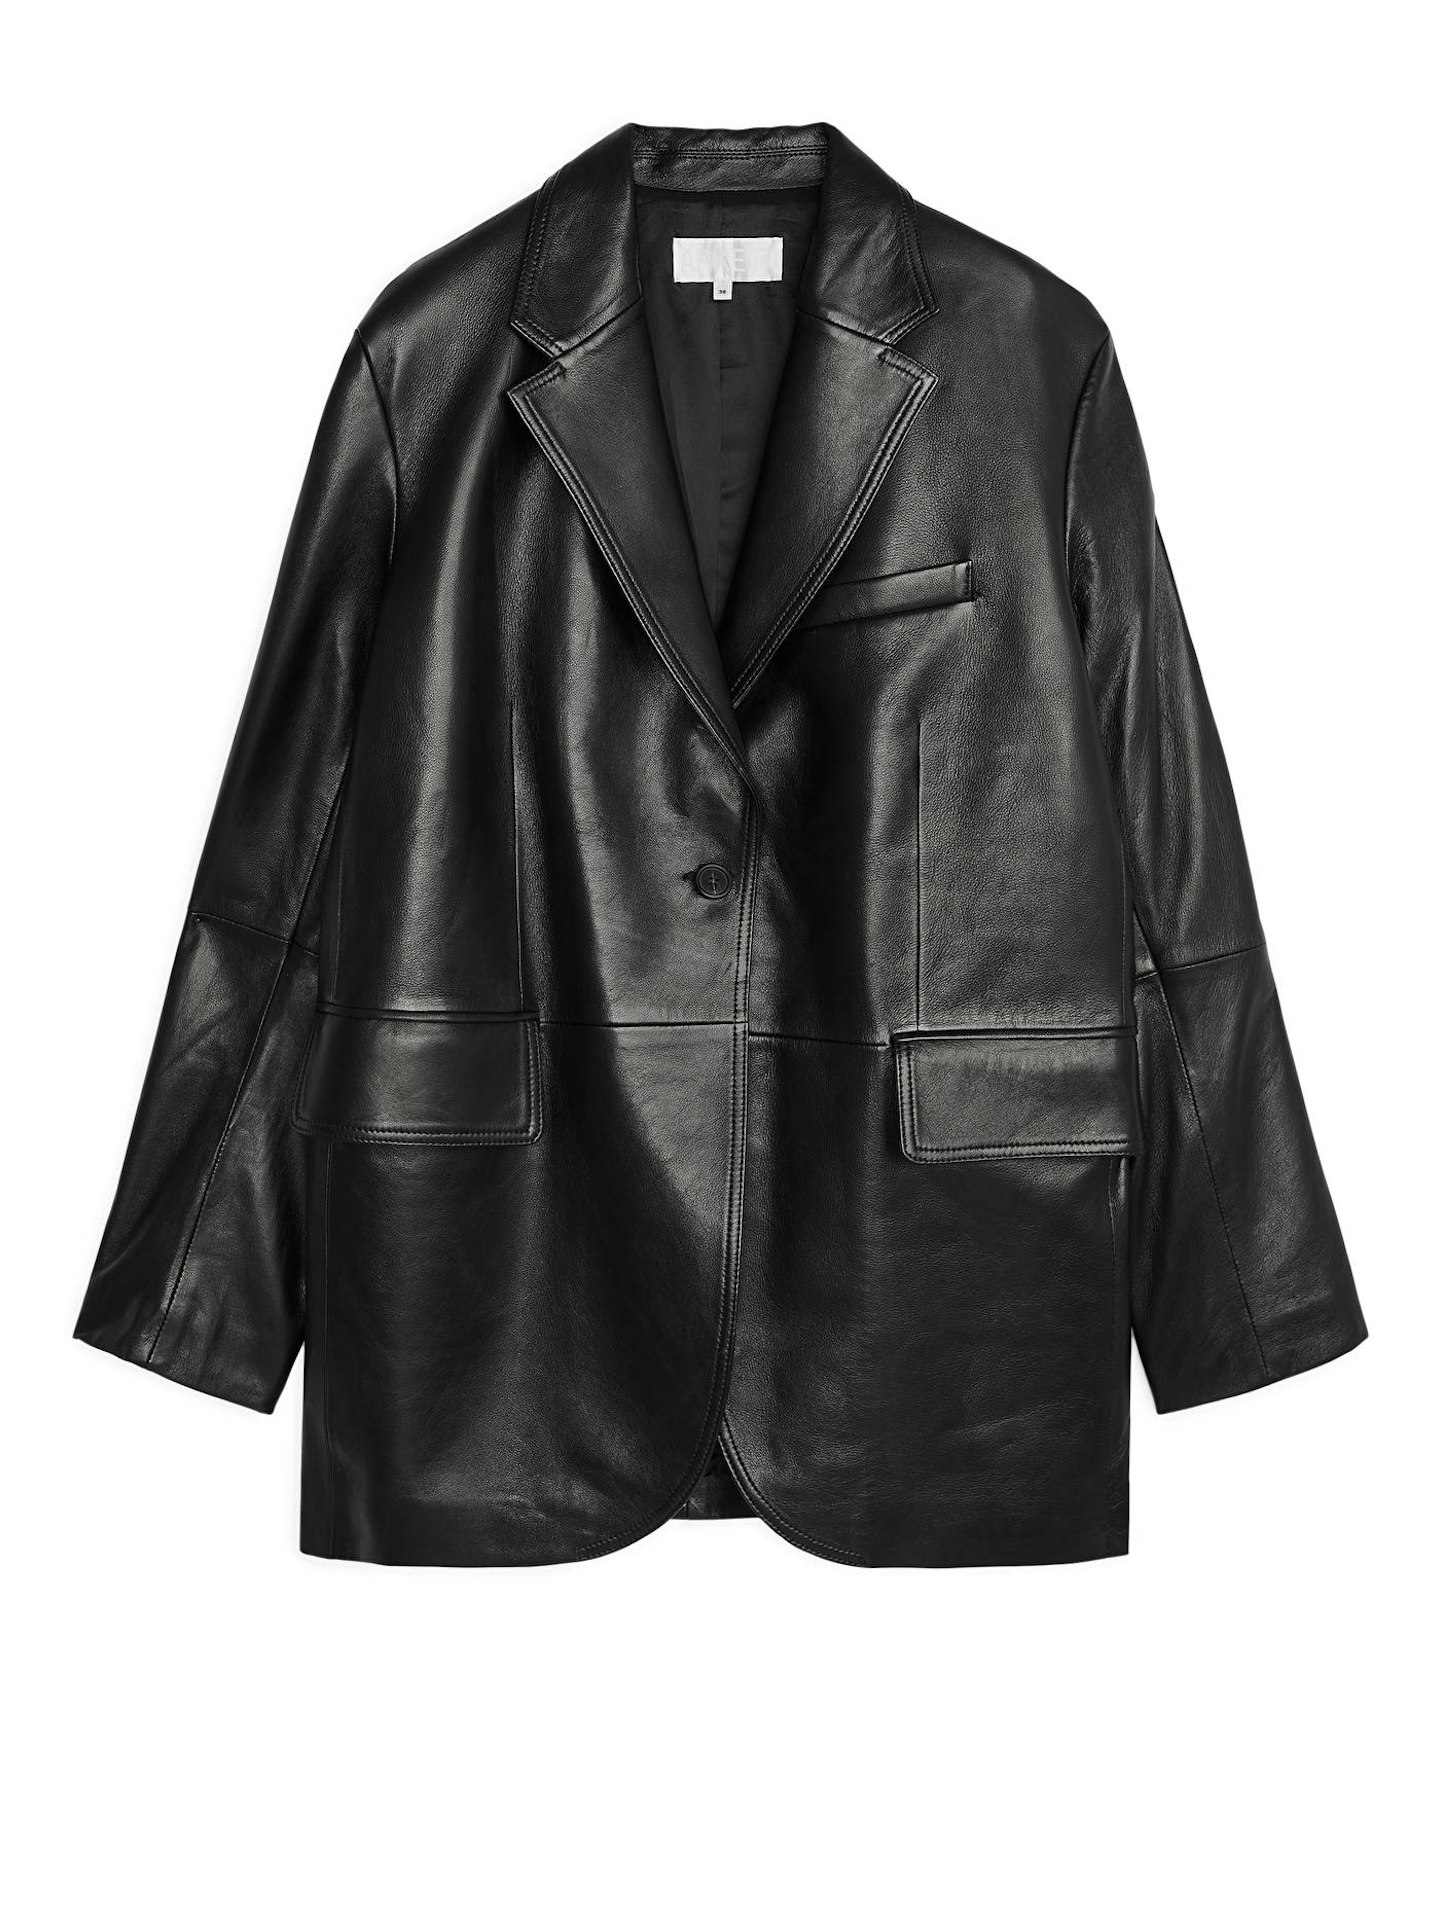 Arket, Leather Blazer, £290